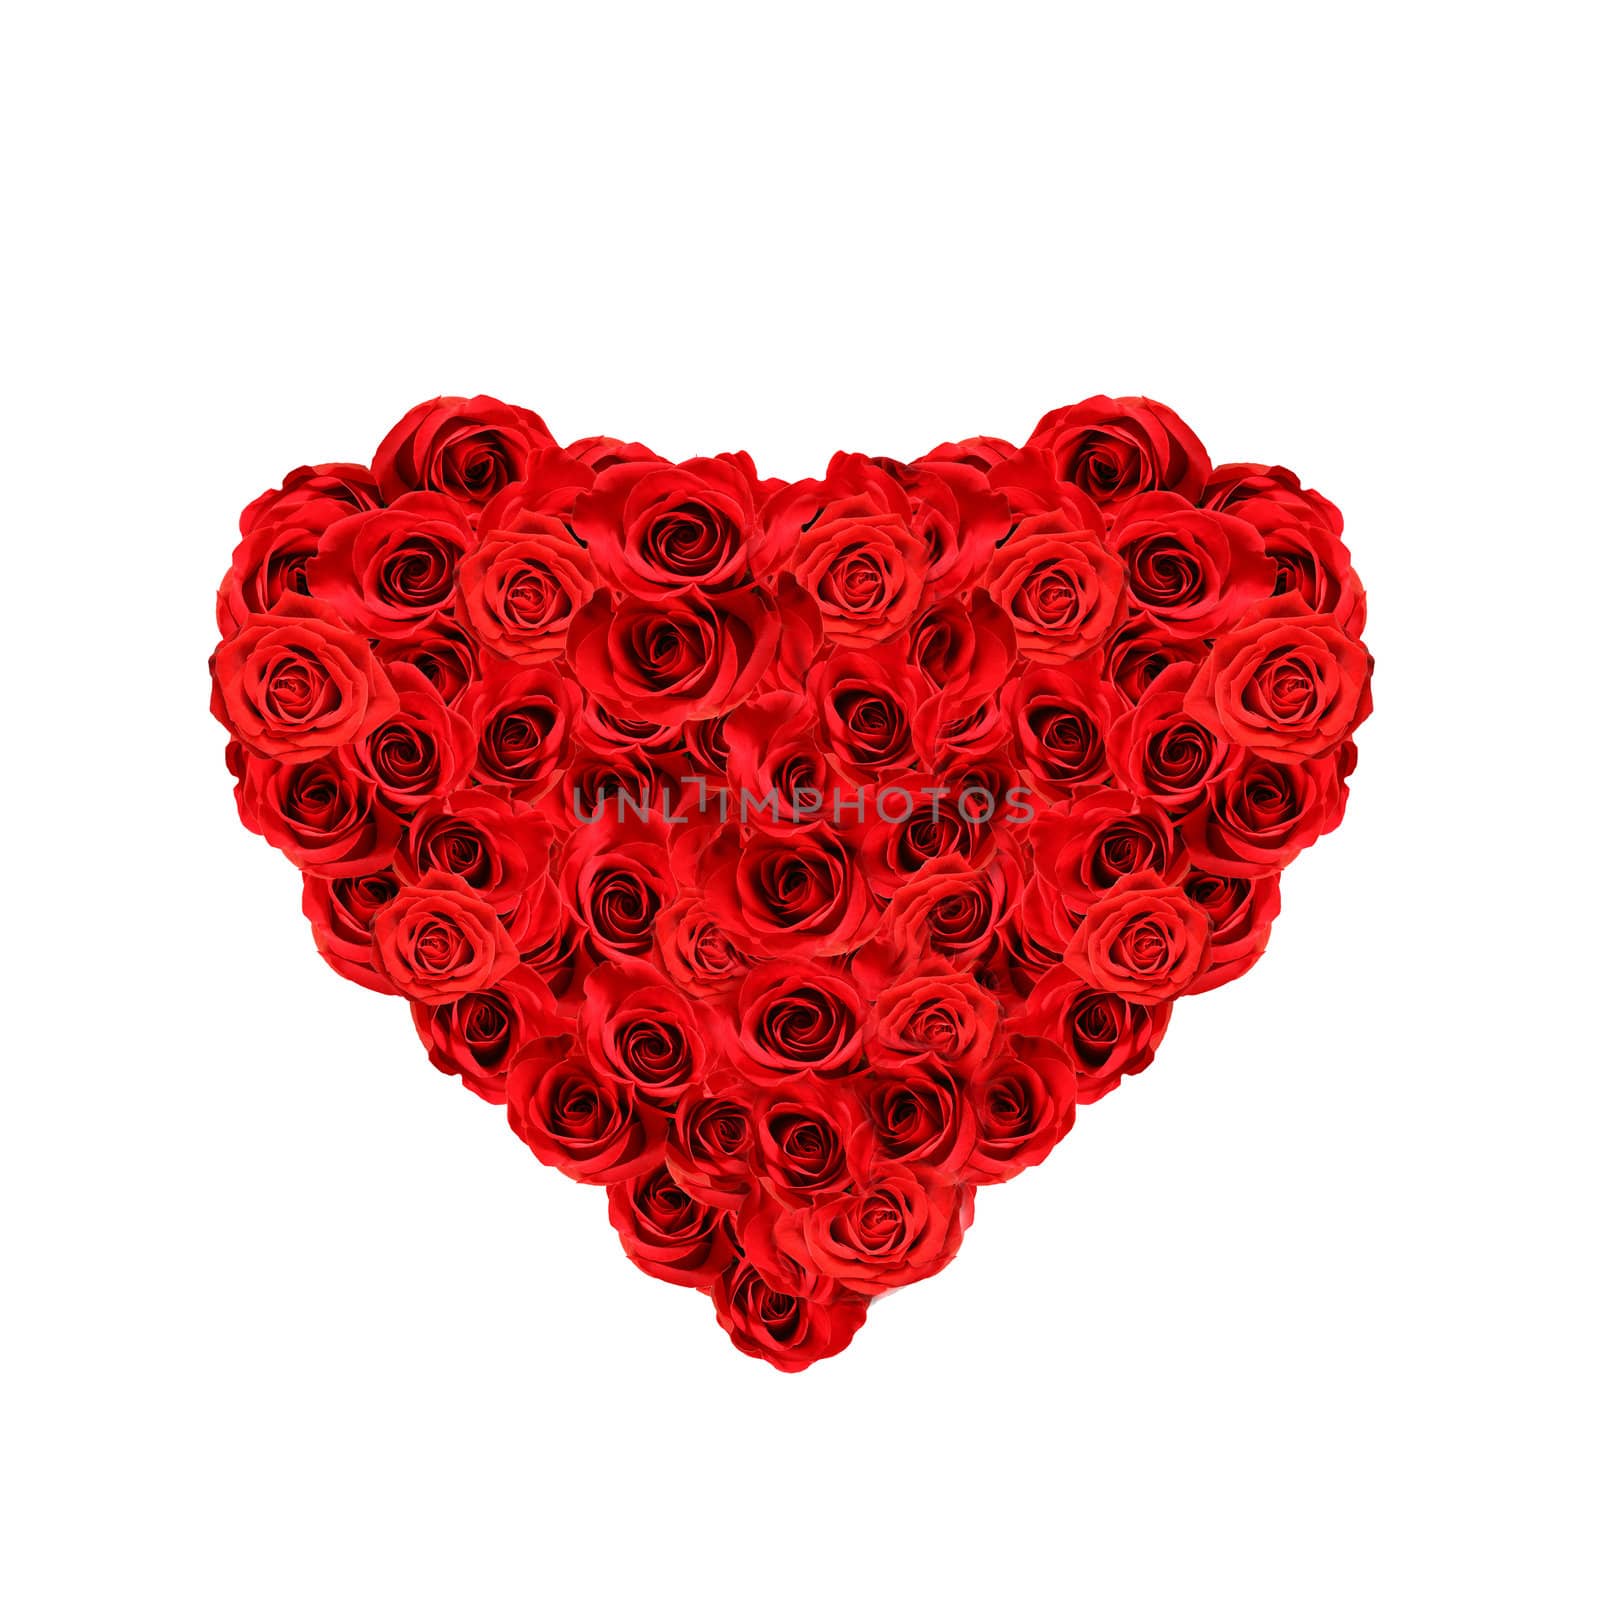 red roses heart by mereutaandrei